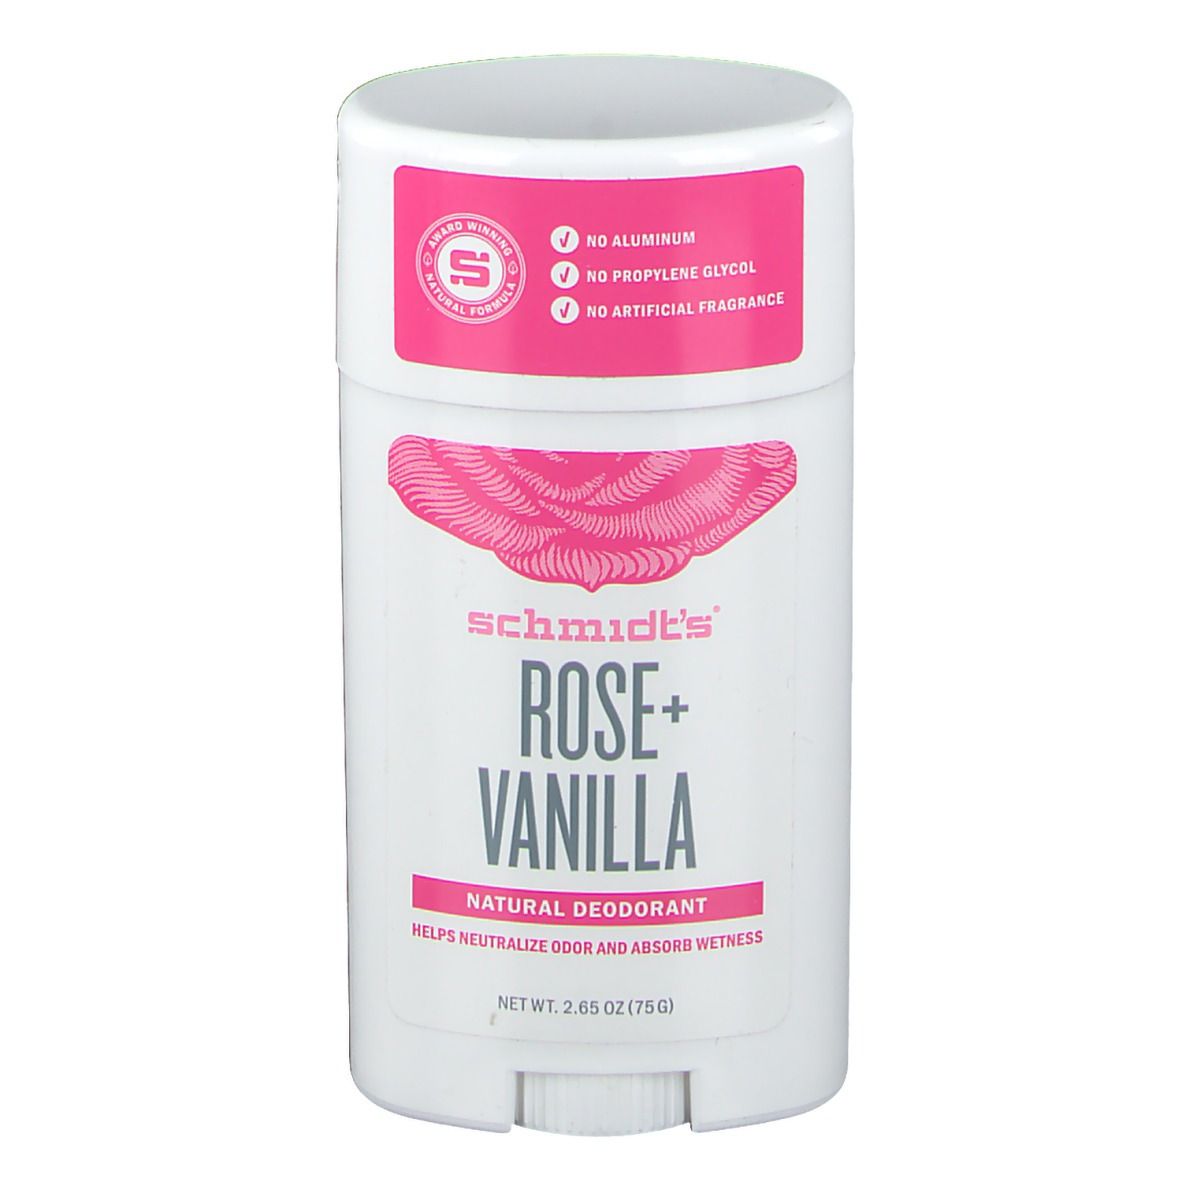 Schmidt's® Deodorant Stick Rosa + Vanille